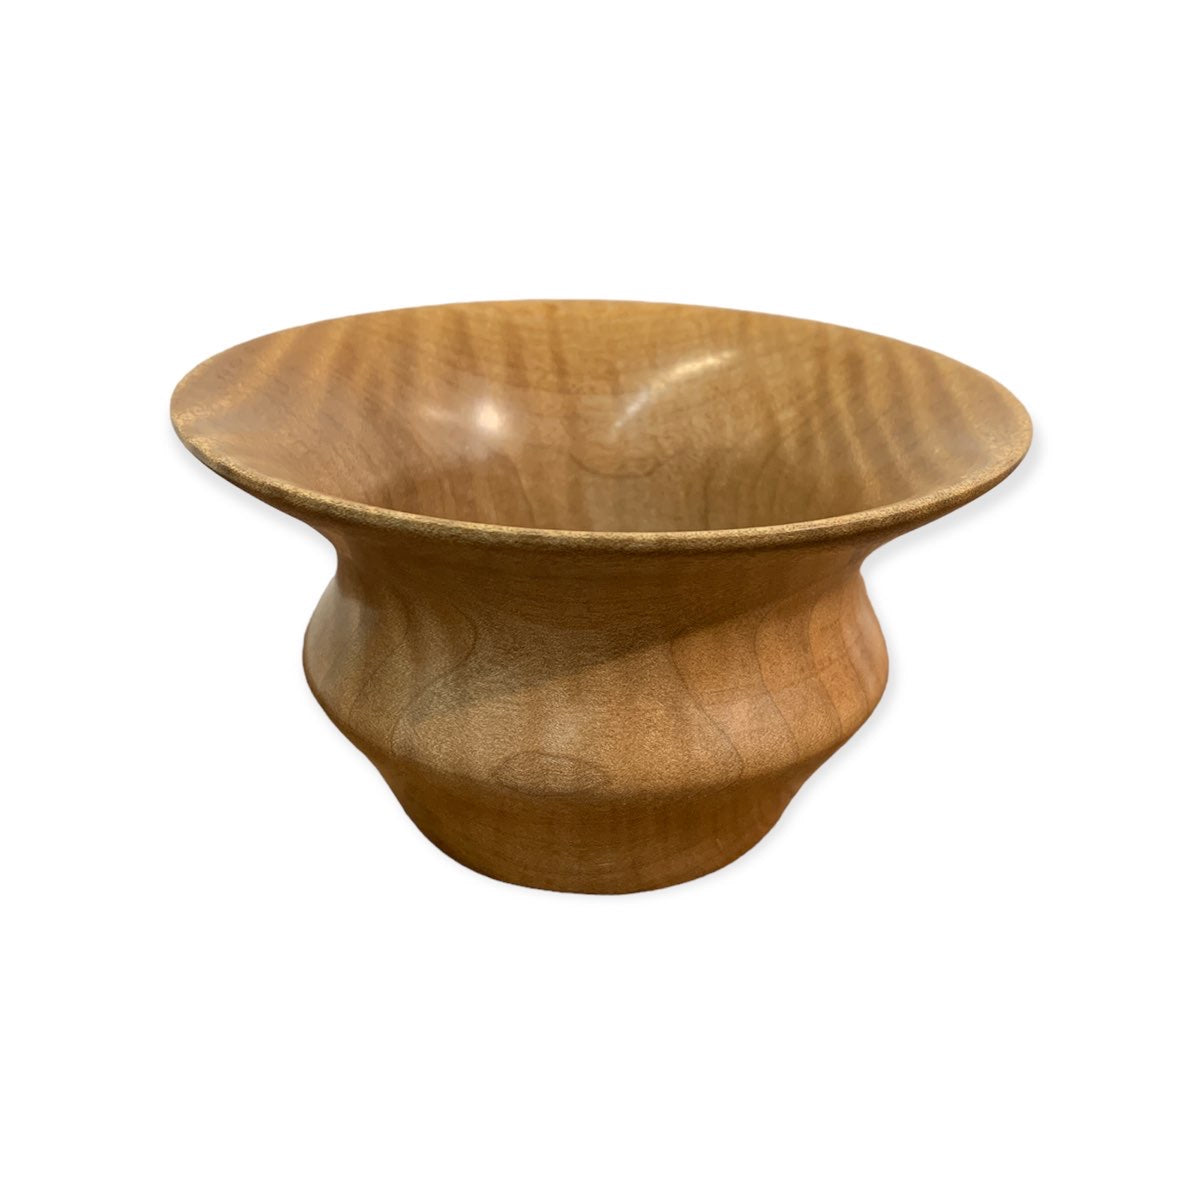 Small Wood Bowl - Maple by Jon Van Der Nol